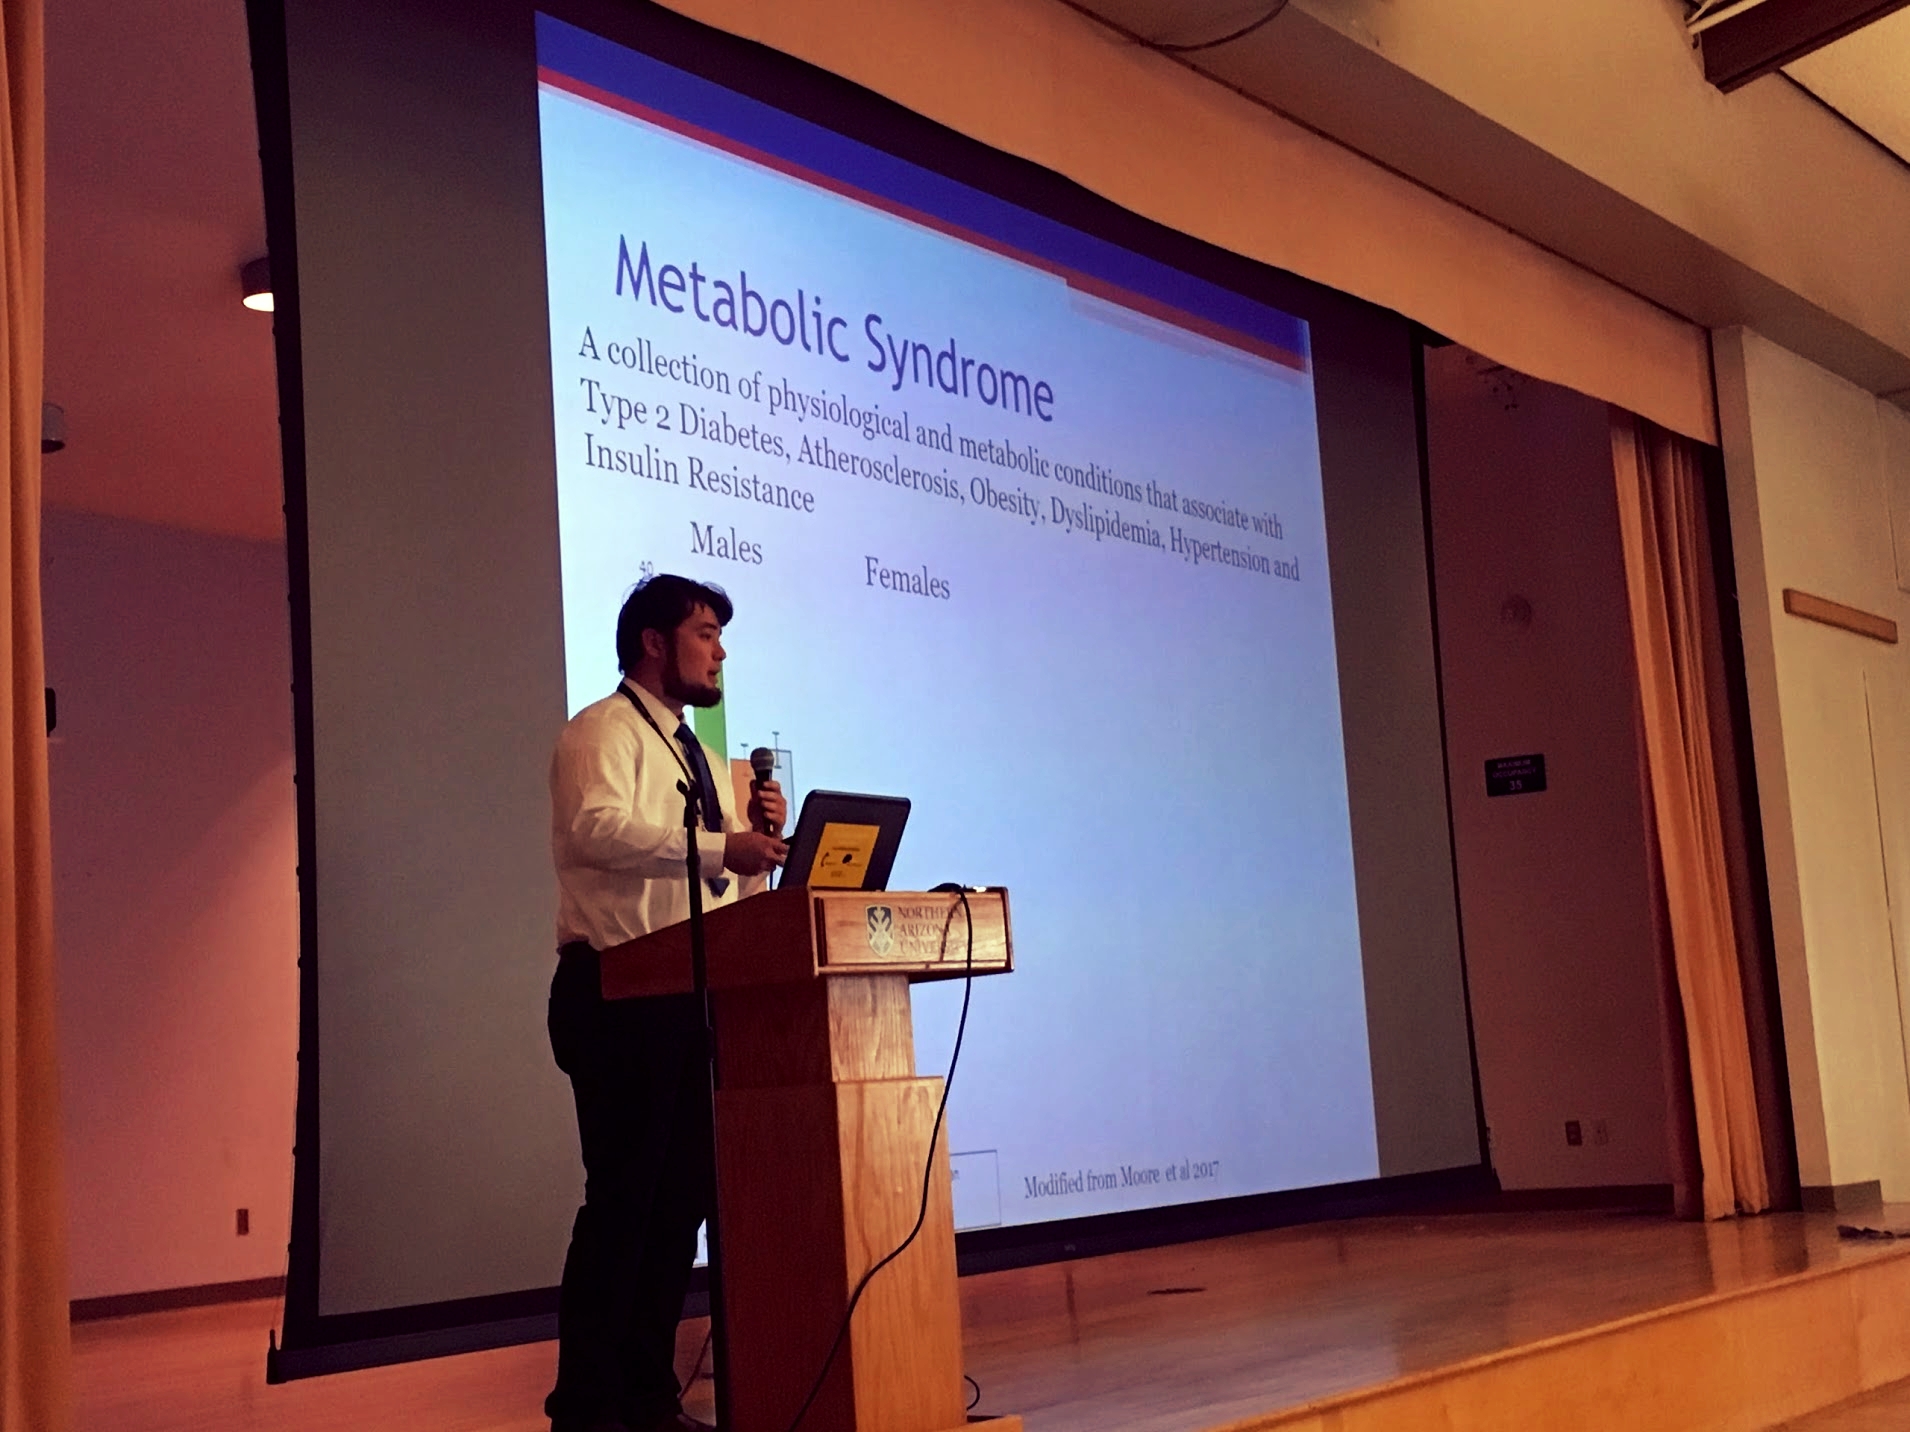  Keane Urashima (graduate student, UofA) presenting his research relating to Metabolic Syndrome.&nbsp; 